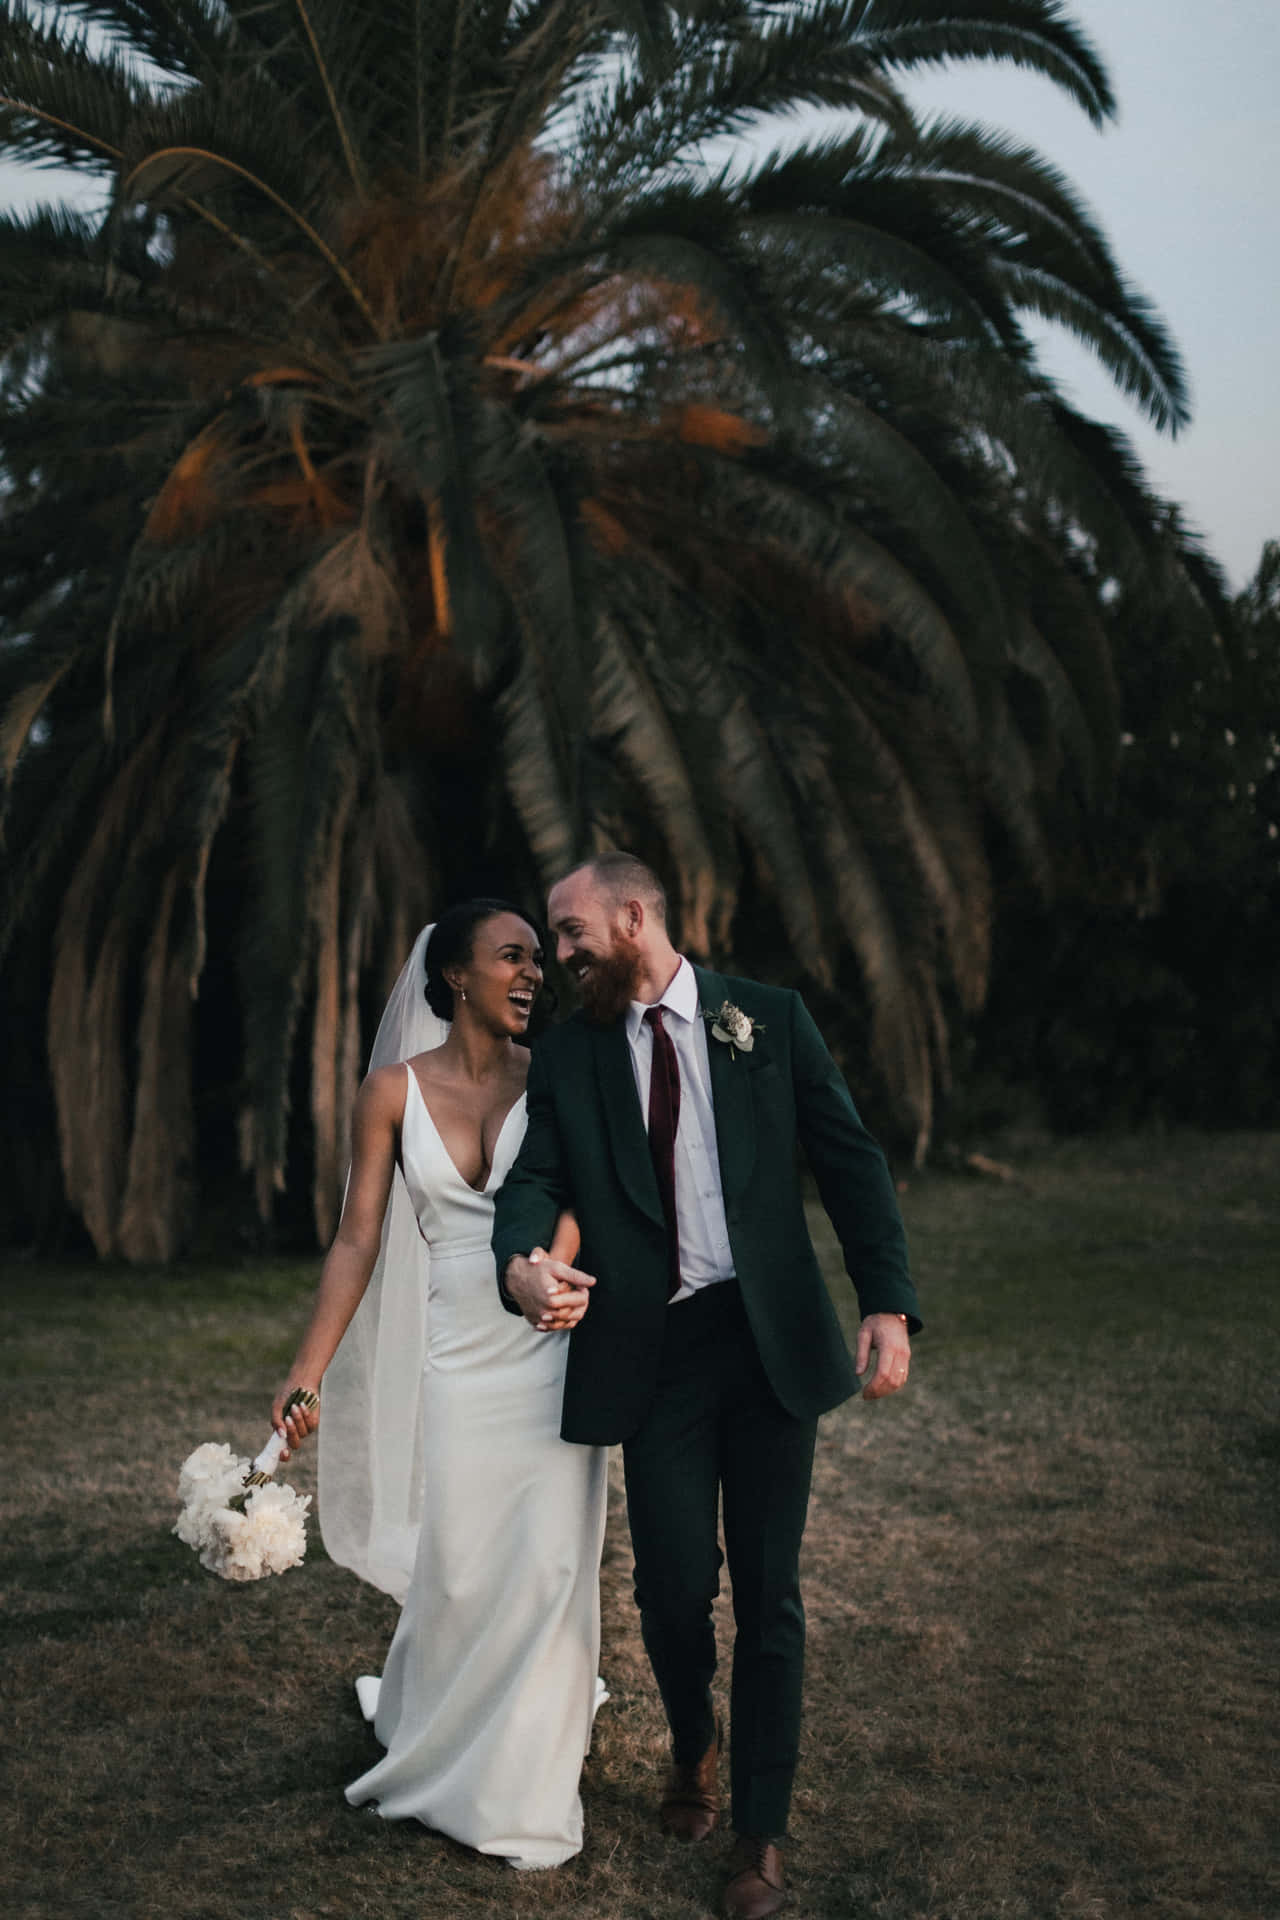 Interracial Couple Wedding Forest Photo Wallpaper